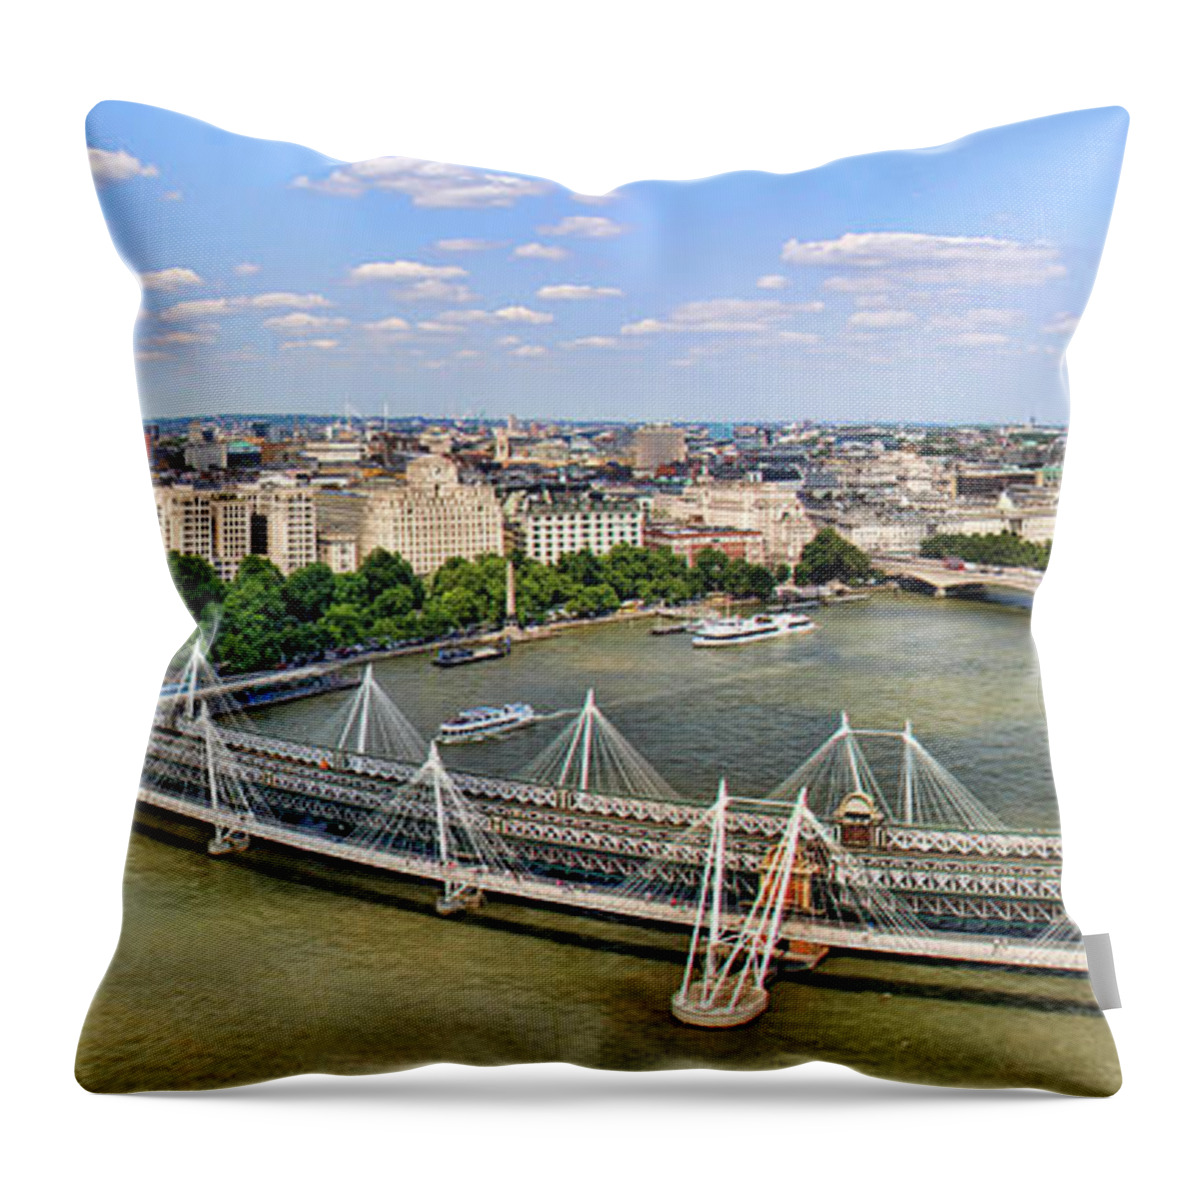 London Panorama Throw Pillow featuring the photograph London Panorama by Kasia Bitner